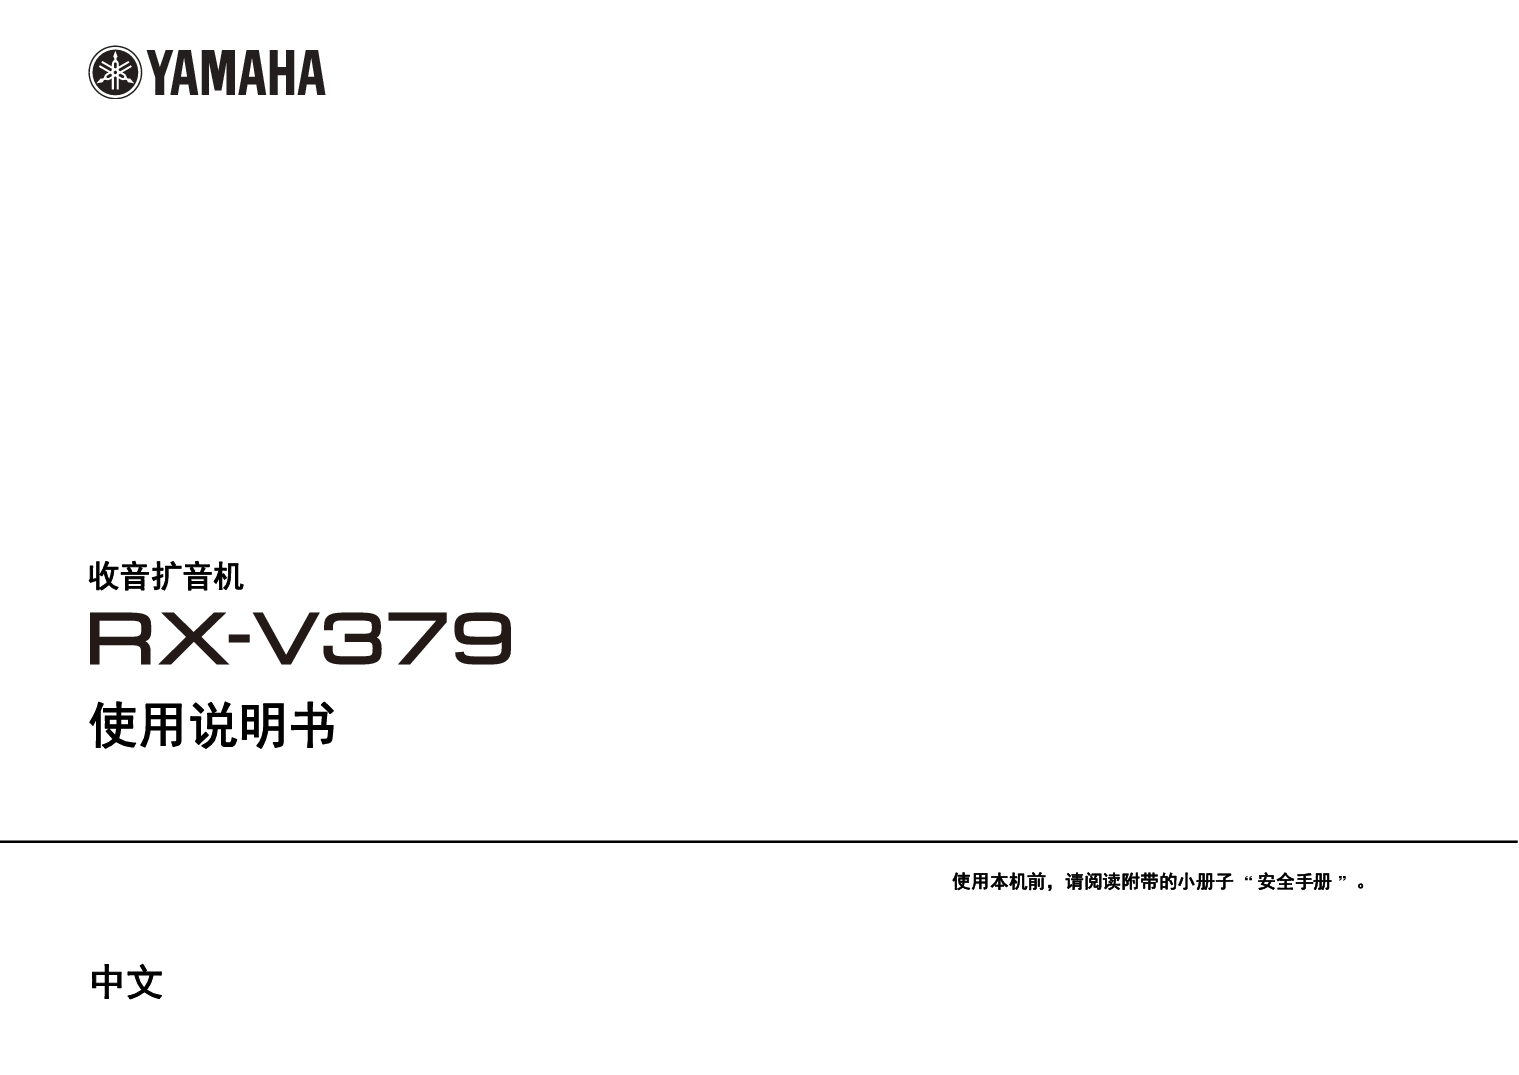 雅马哈 Yamaha RX-V379 使用说明书 封面